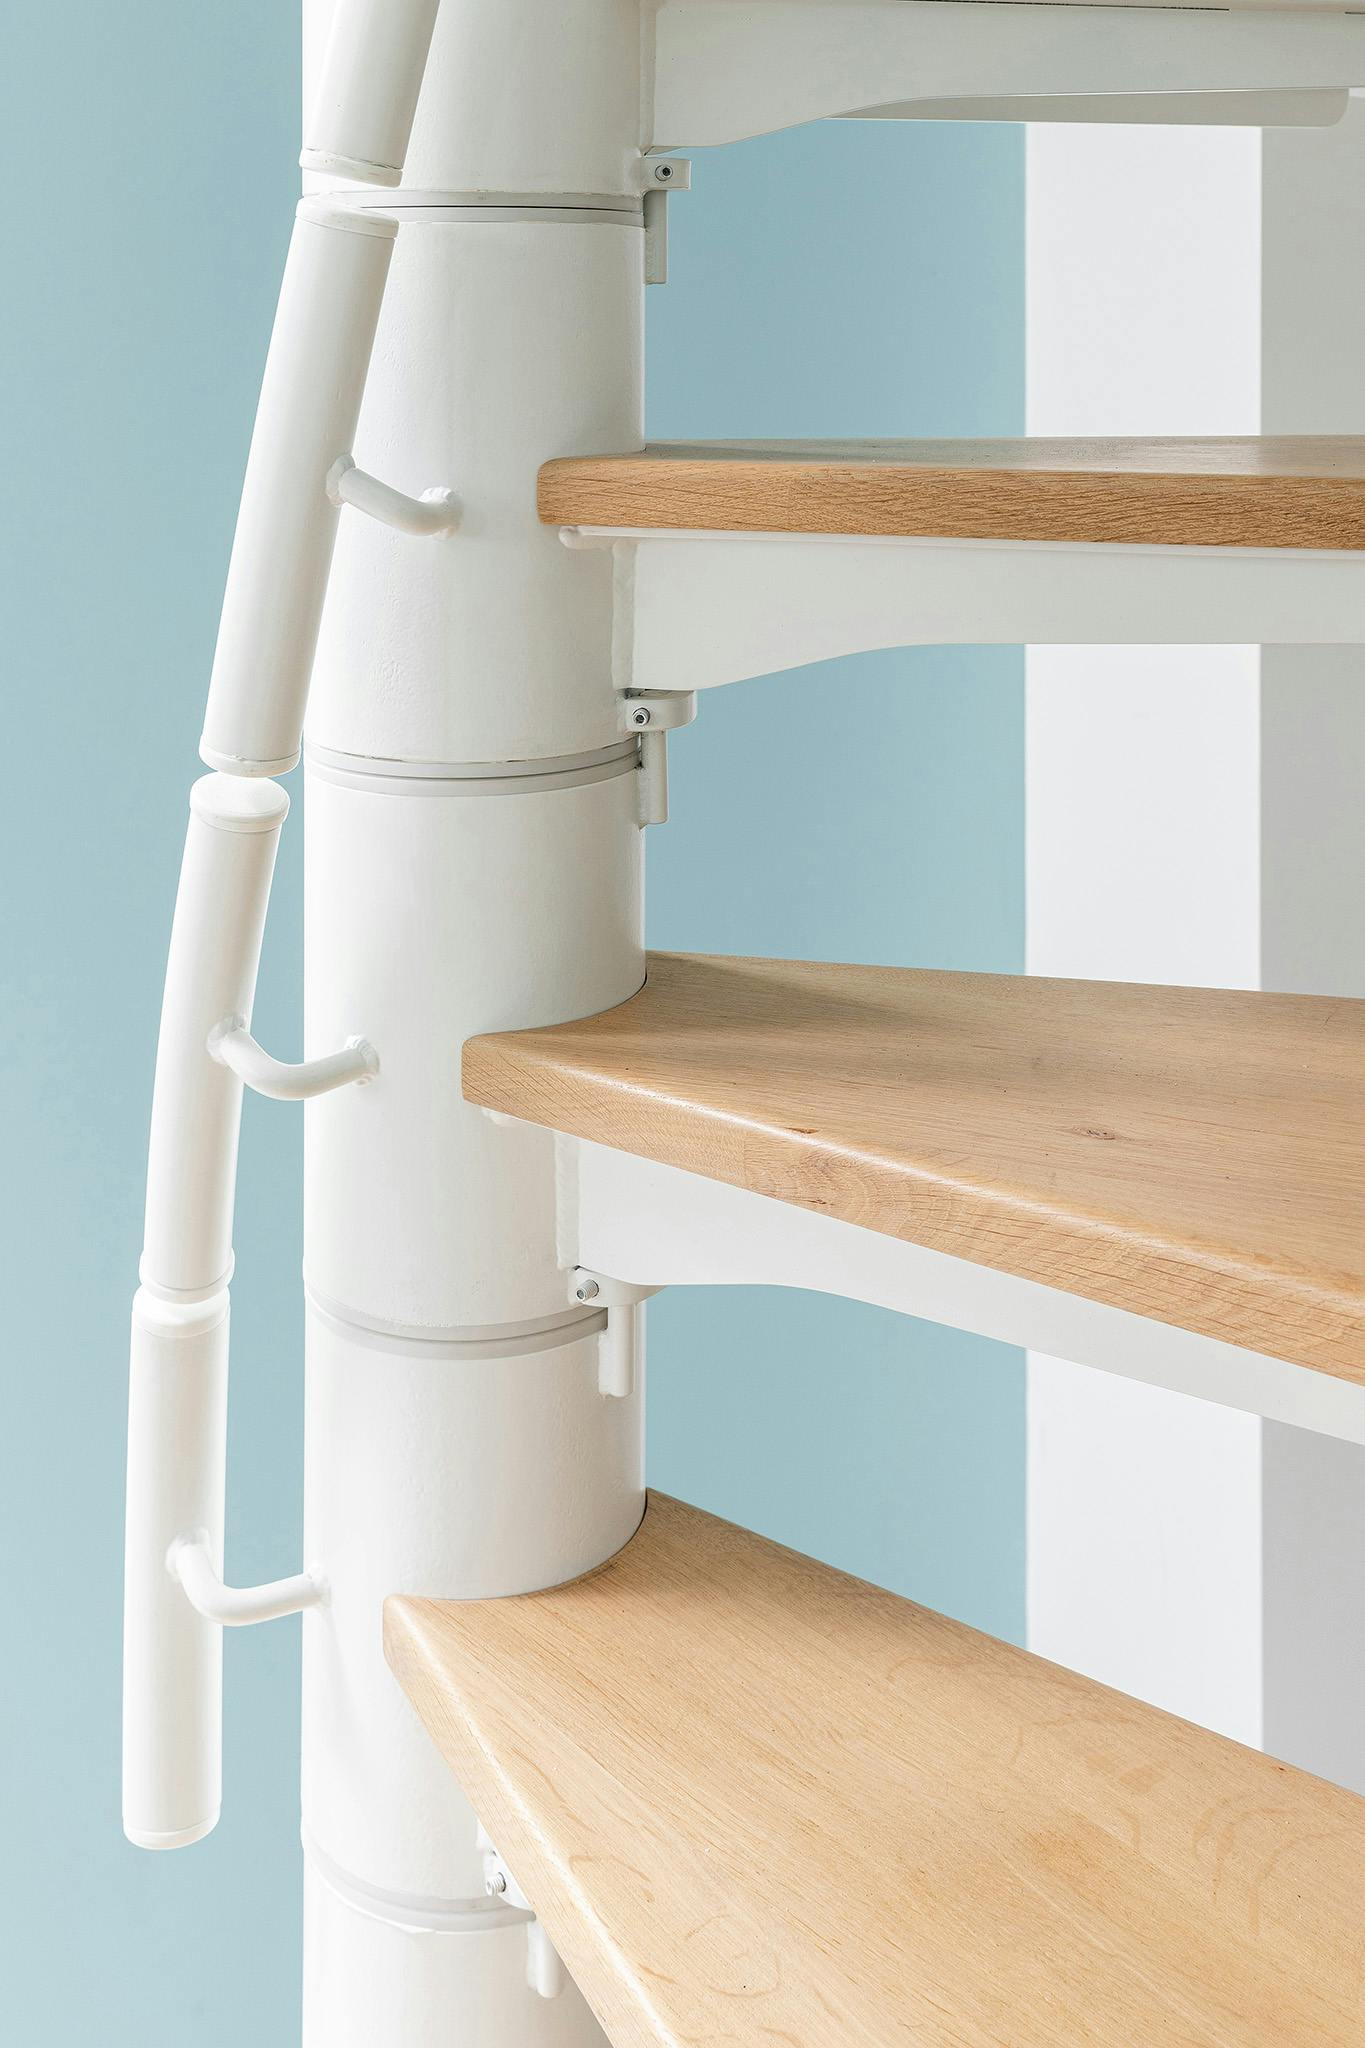 Escalier escamotable de grenier ou combles avec marches en bois.